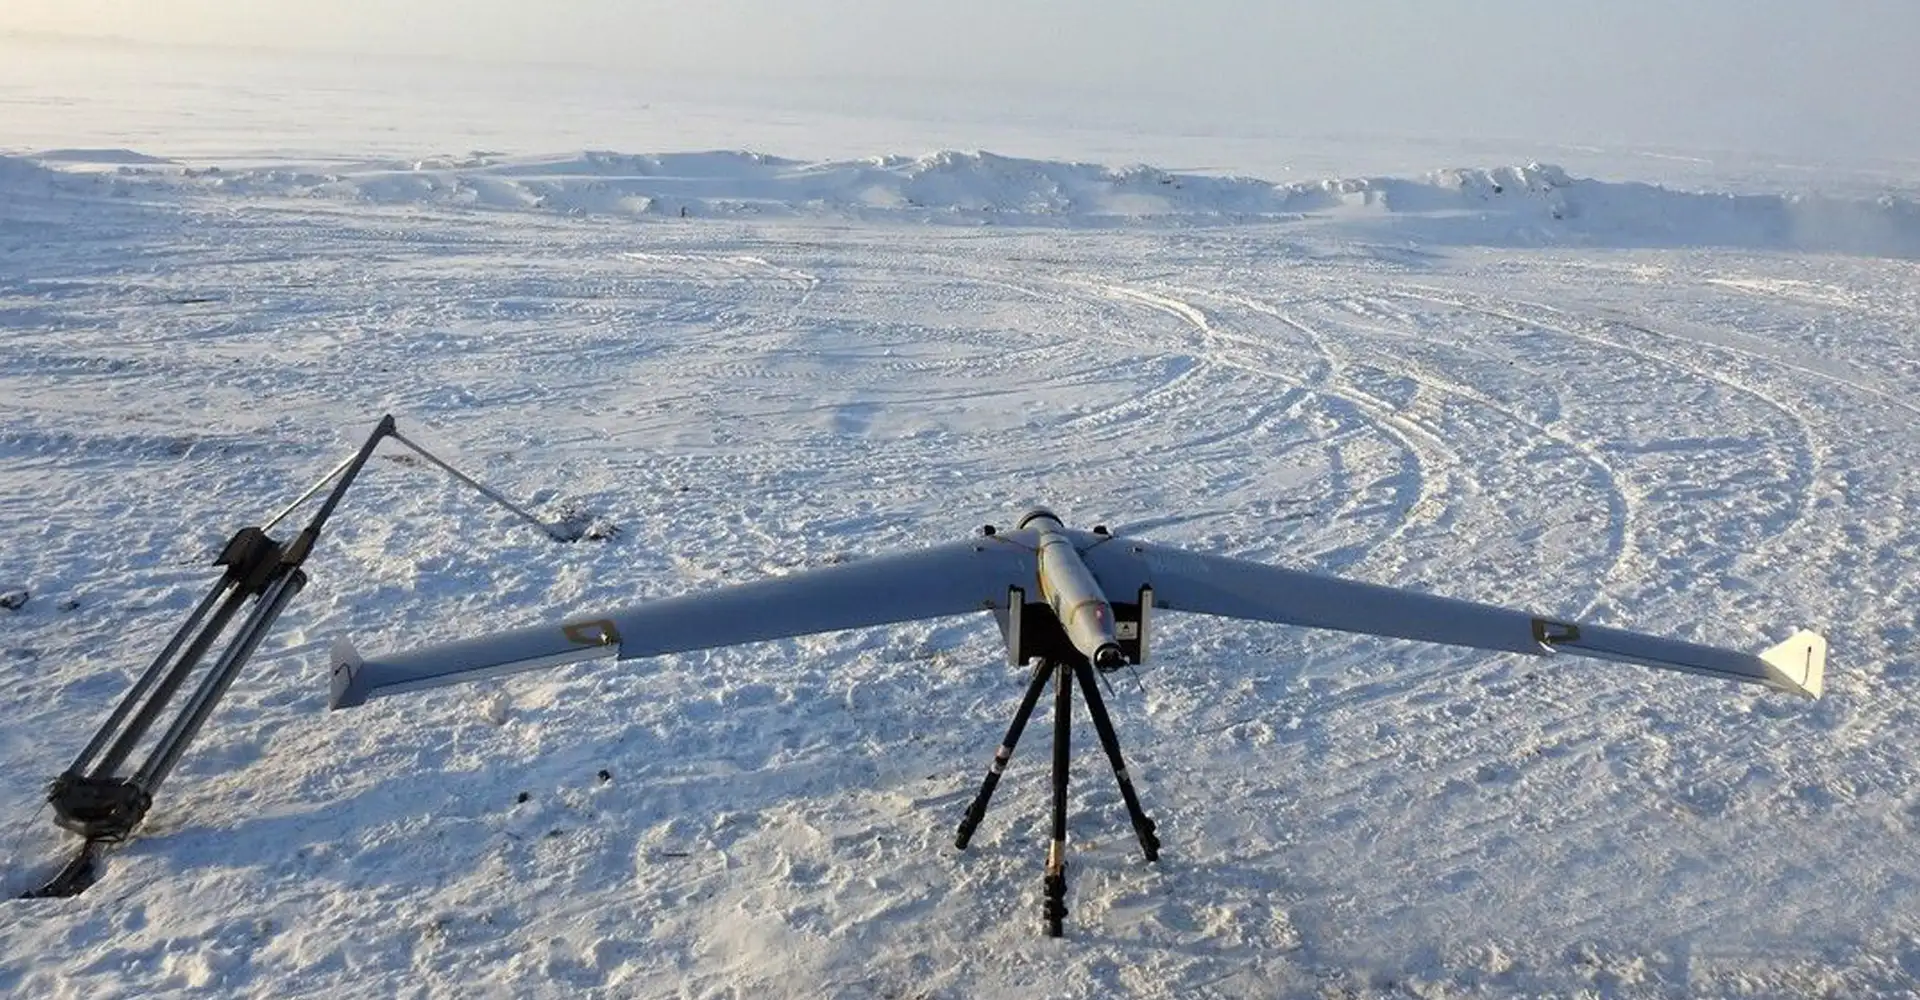 "Gazpromneft-Khantos purchased ZALA unmanned aerial vehicles